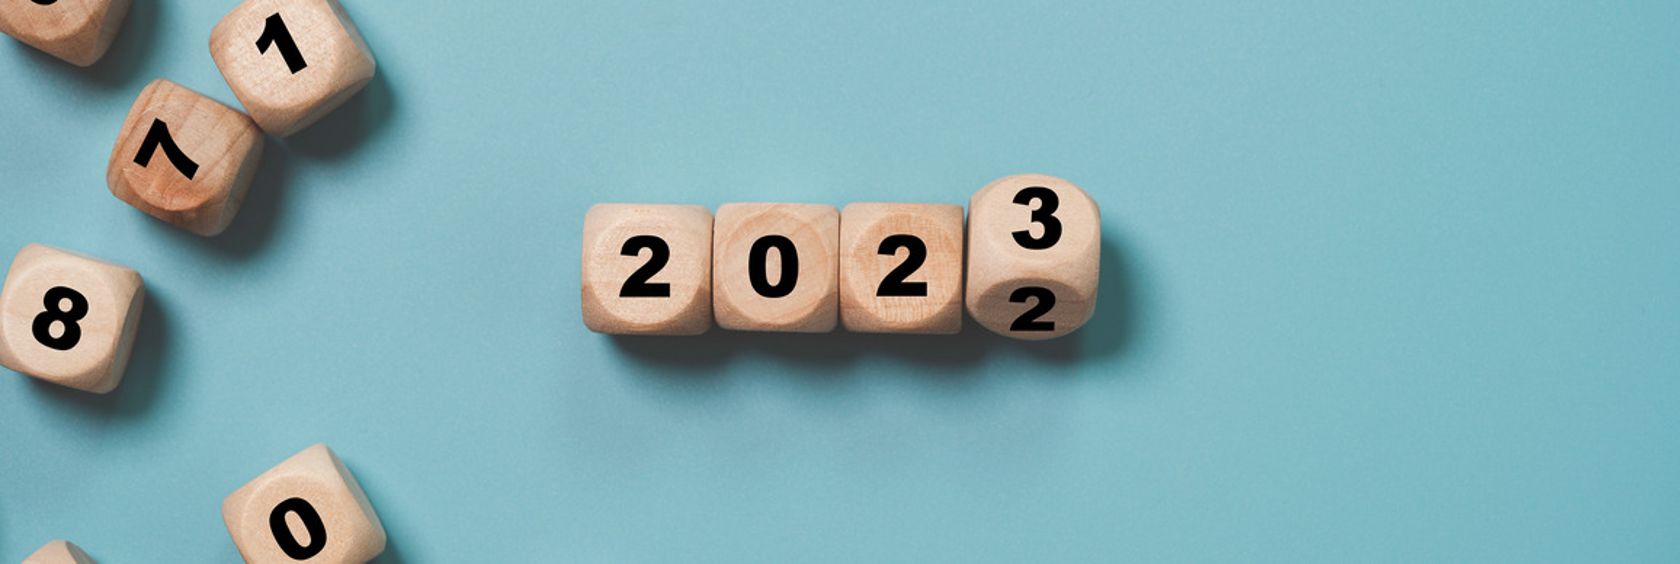 Mercati finanziari nel 2023: l'outlook di Banca Generali